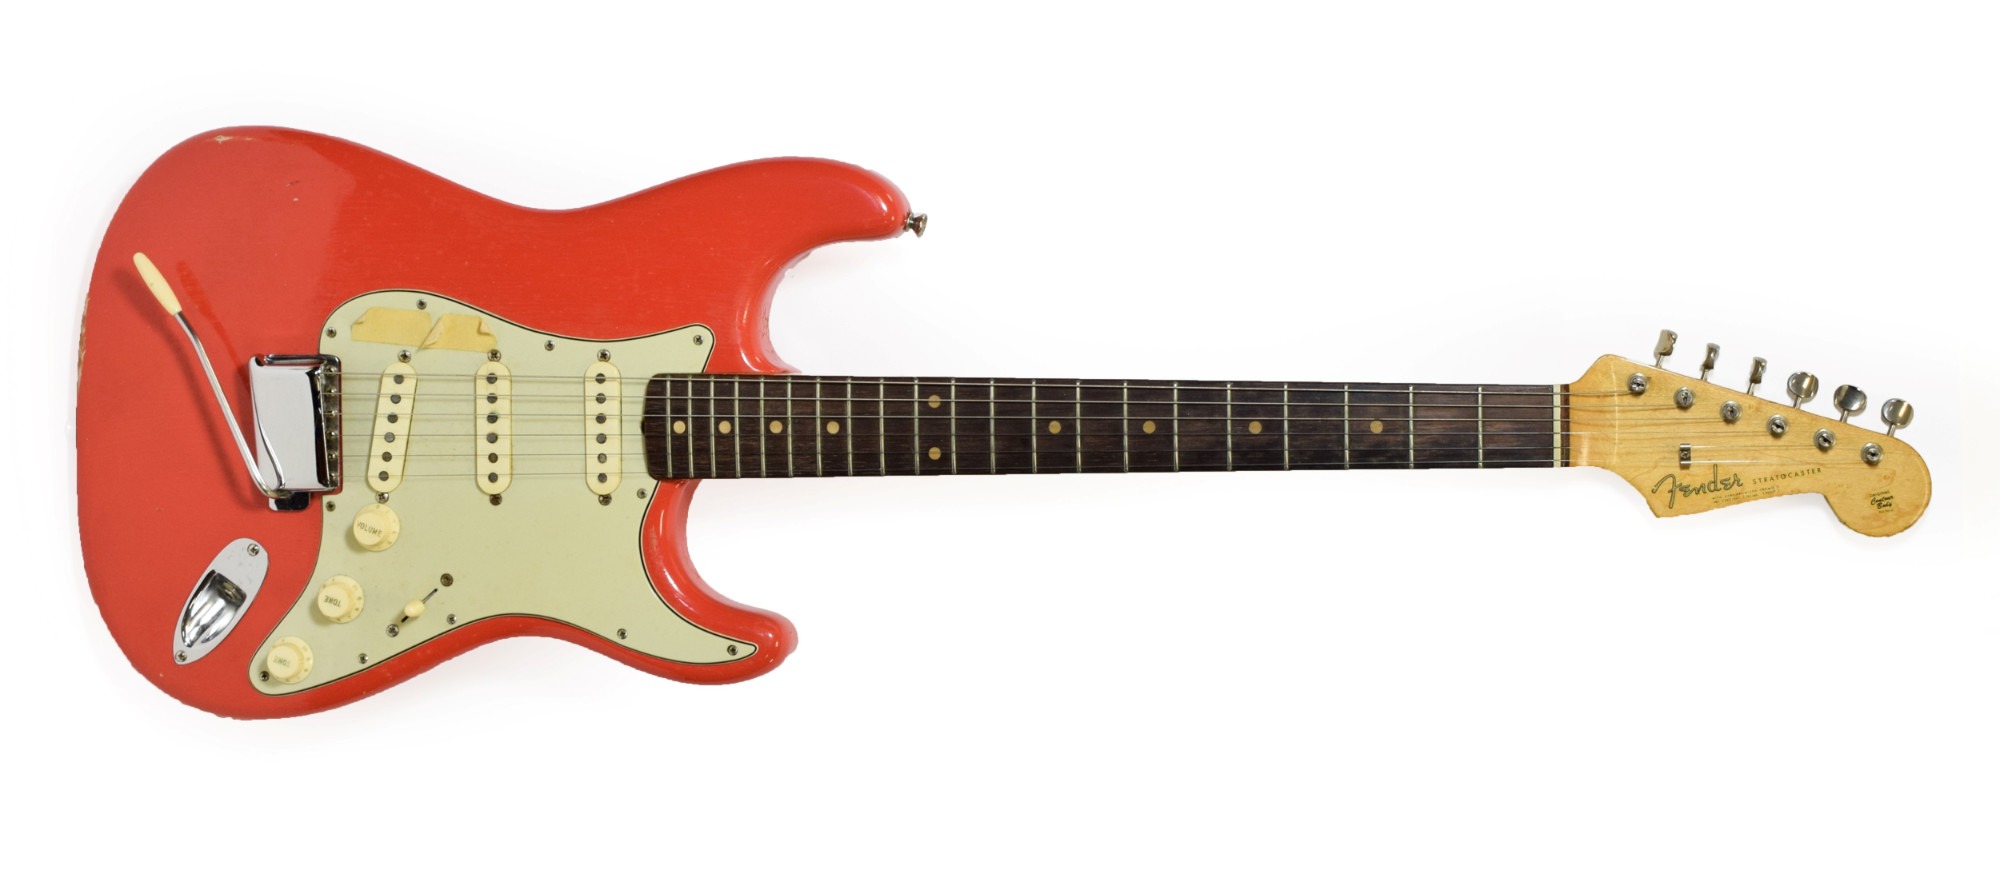 1962 Pre-CBS Fender Stratocaster – Sold for £25,000